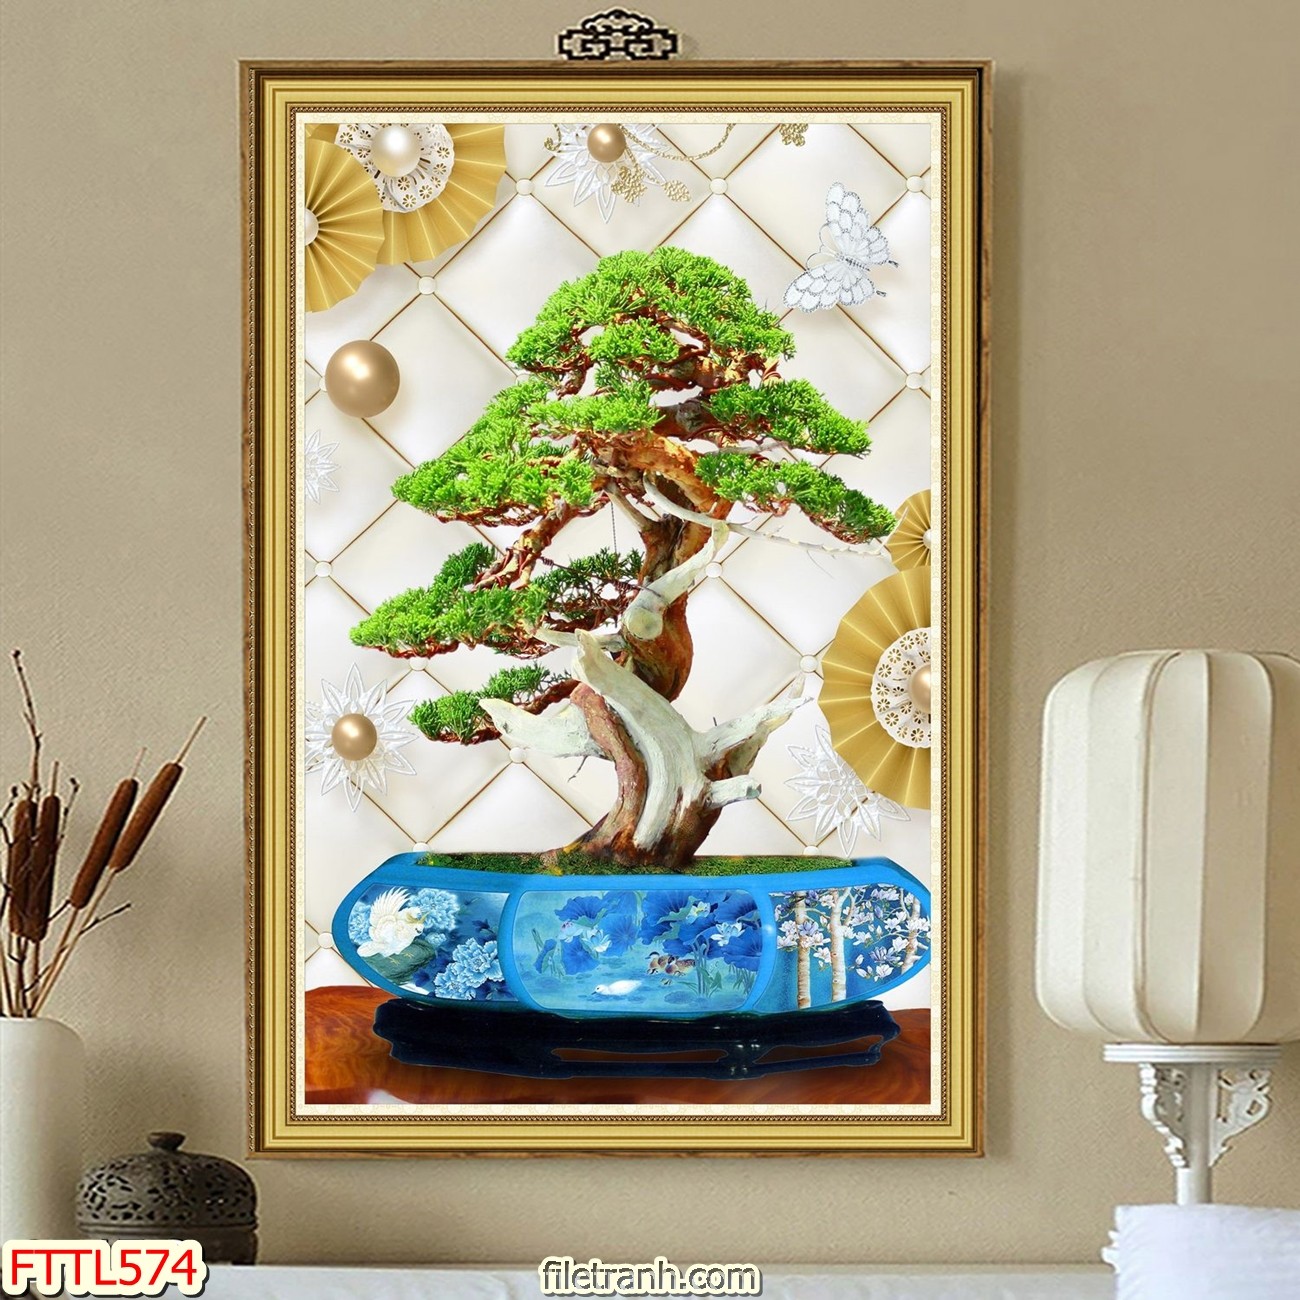 https://filetranh.com/file-tranh-chau-mai-bonsai/file-tranh-chau-mai-bonsai-fttl574.html